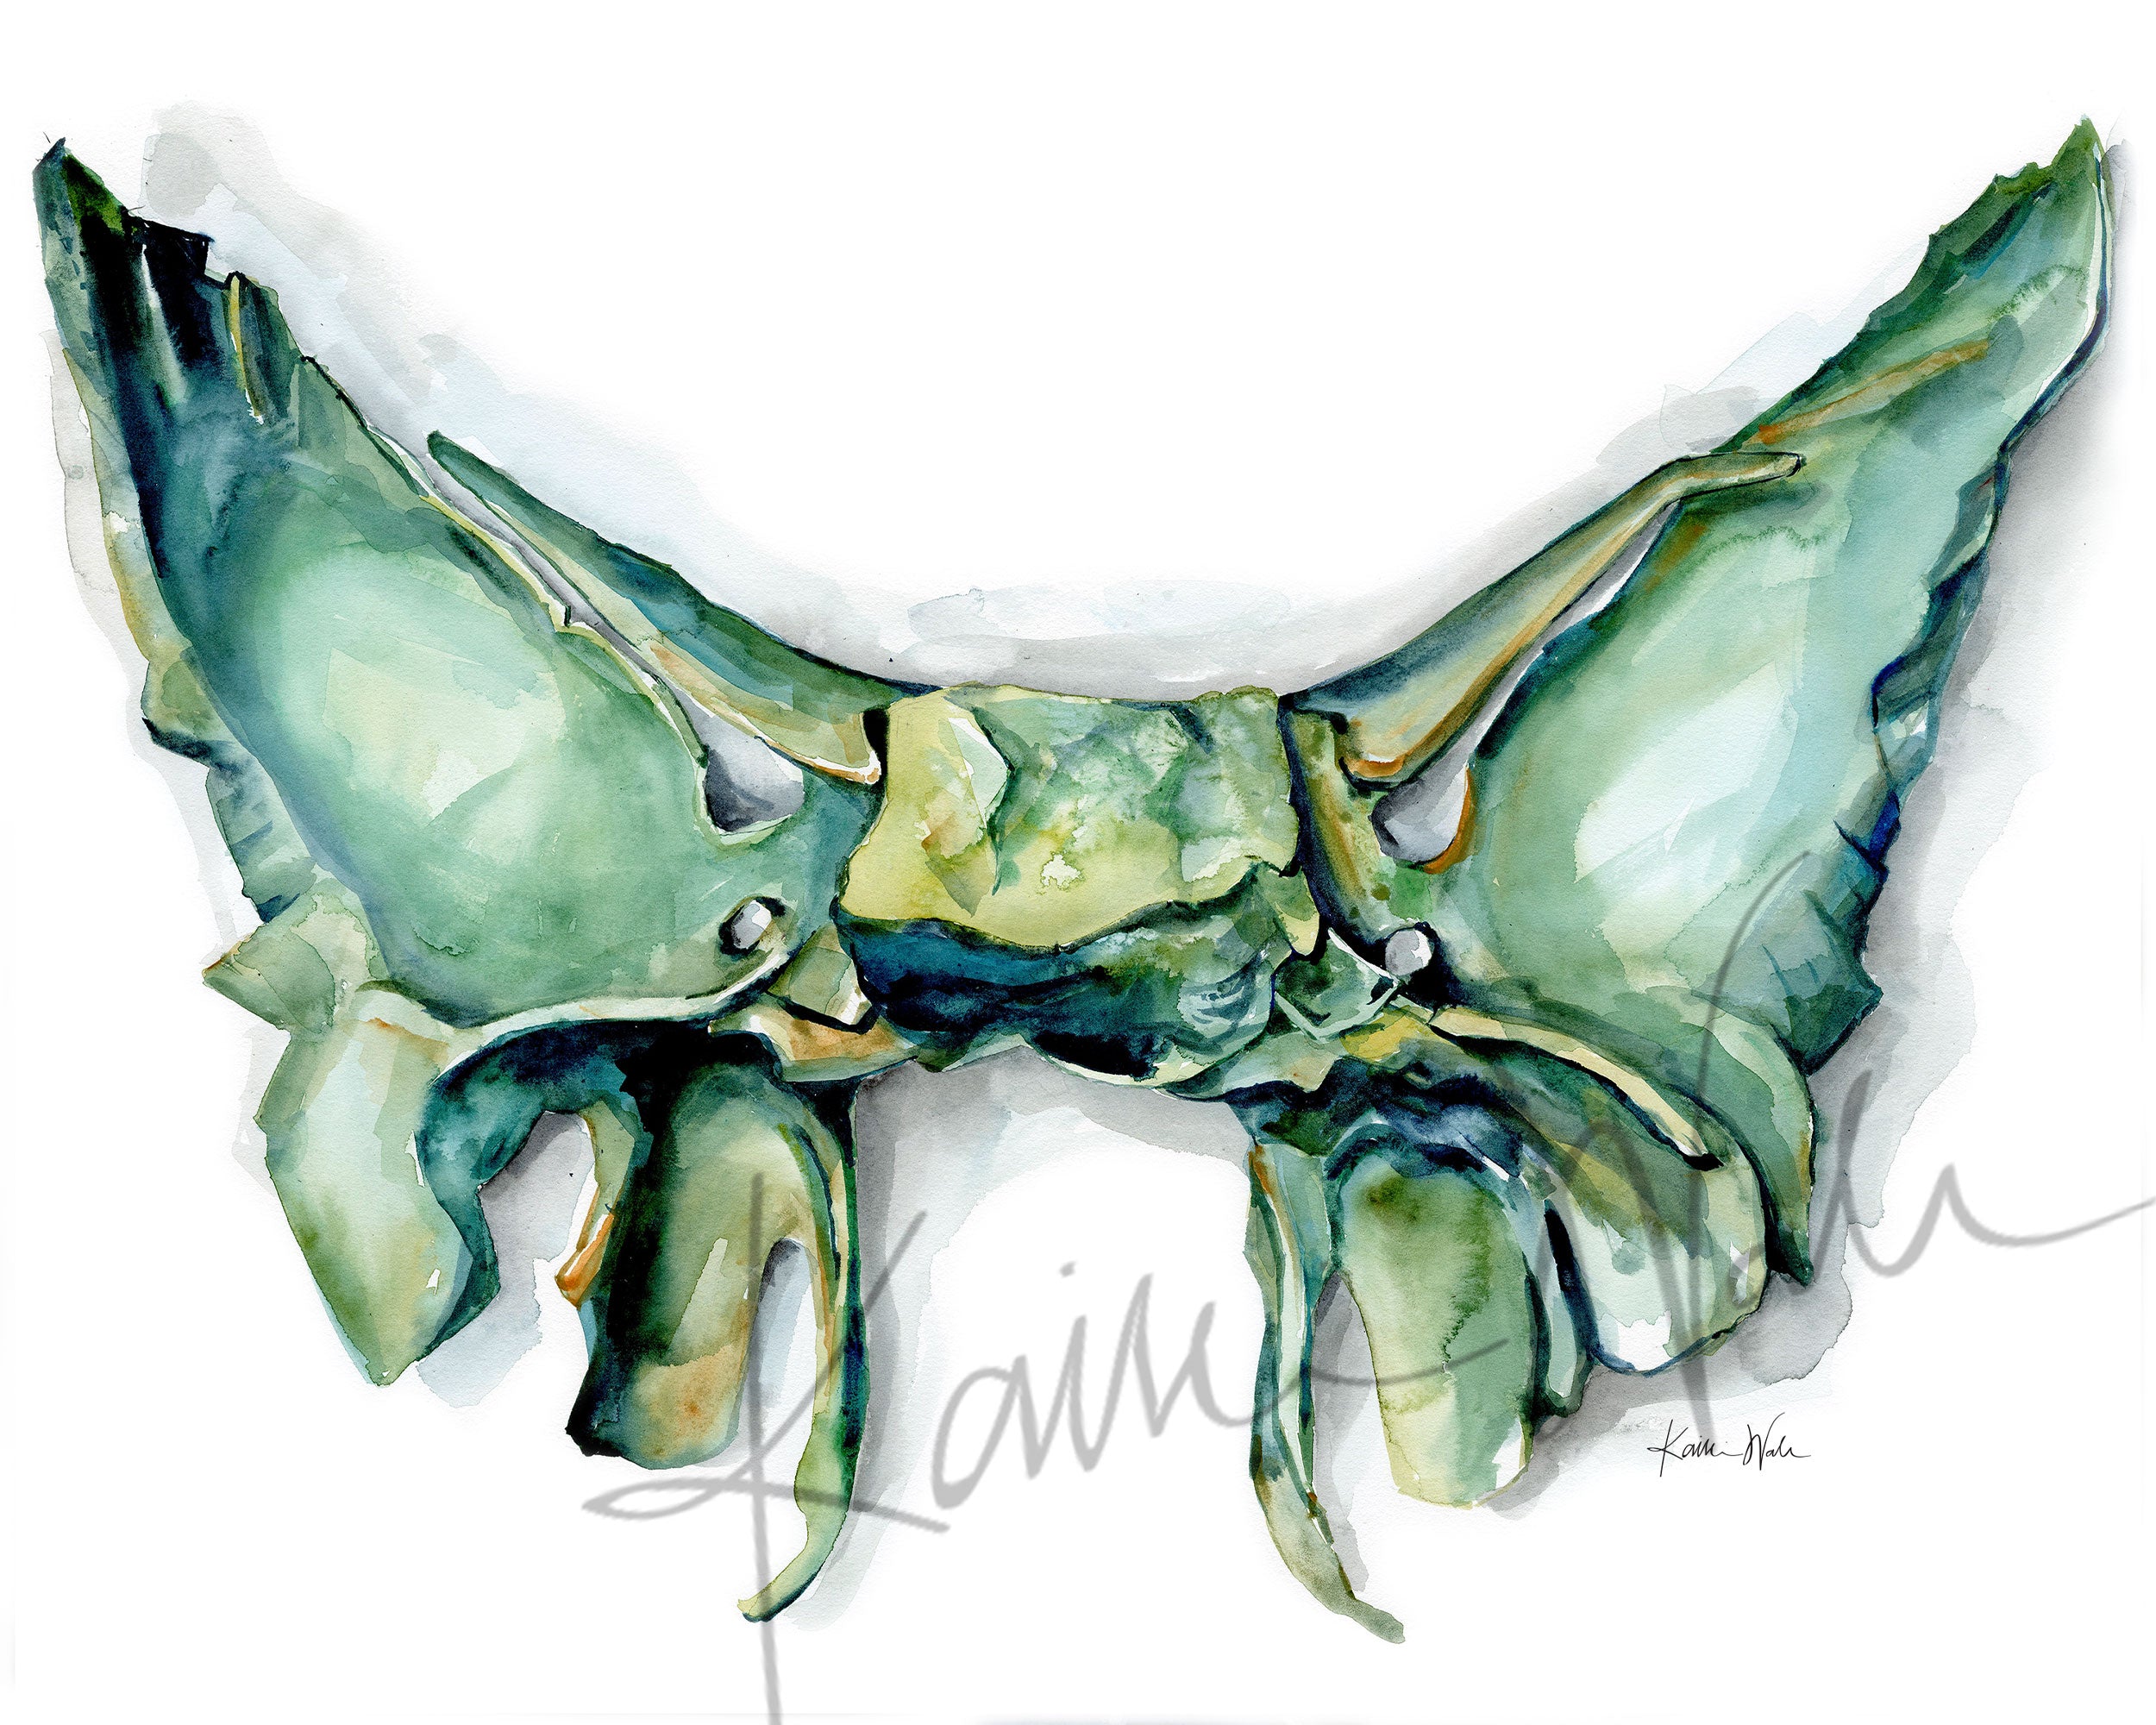 Unframed watercolor painting of the sphenoid bone.